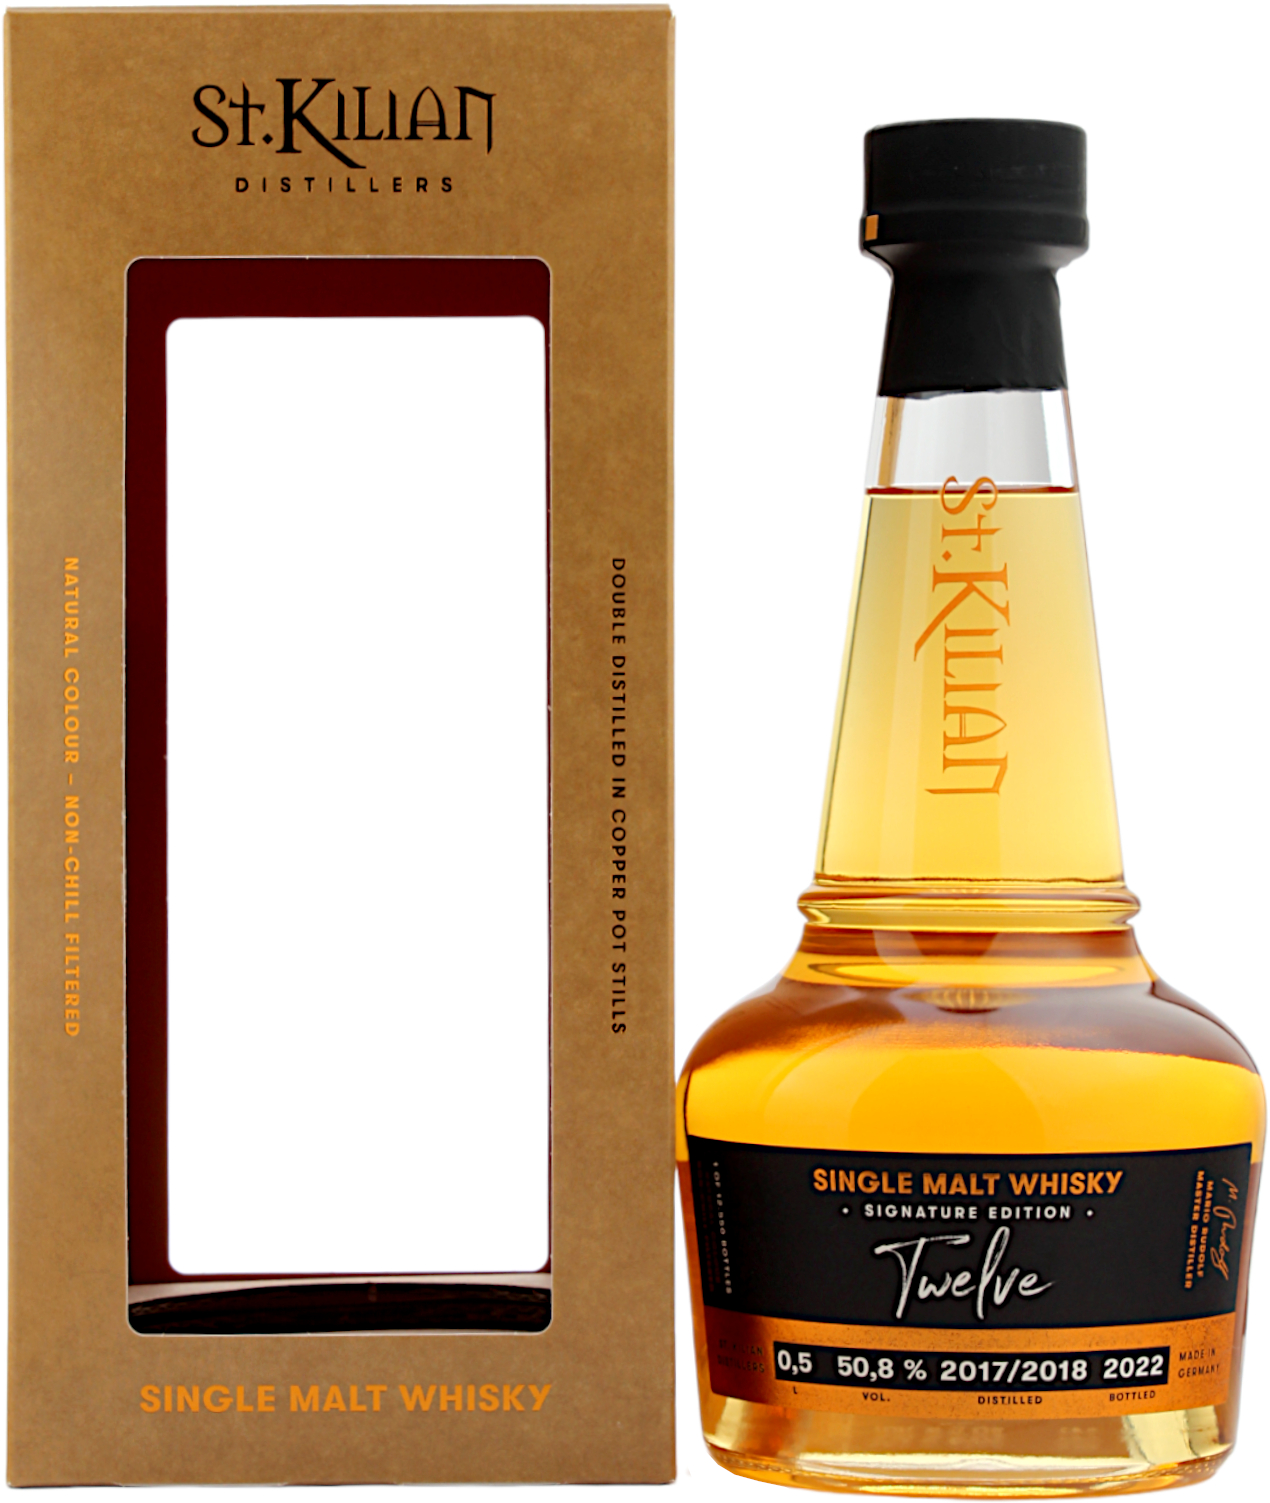 St. Kilian Signature Edition Twelve Moscatel und Rum Cask 50.8% 0,5l